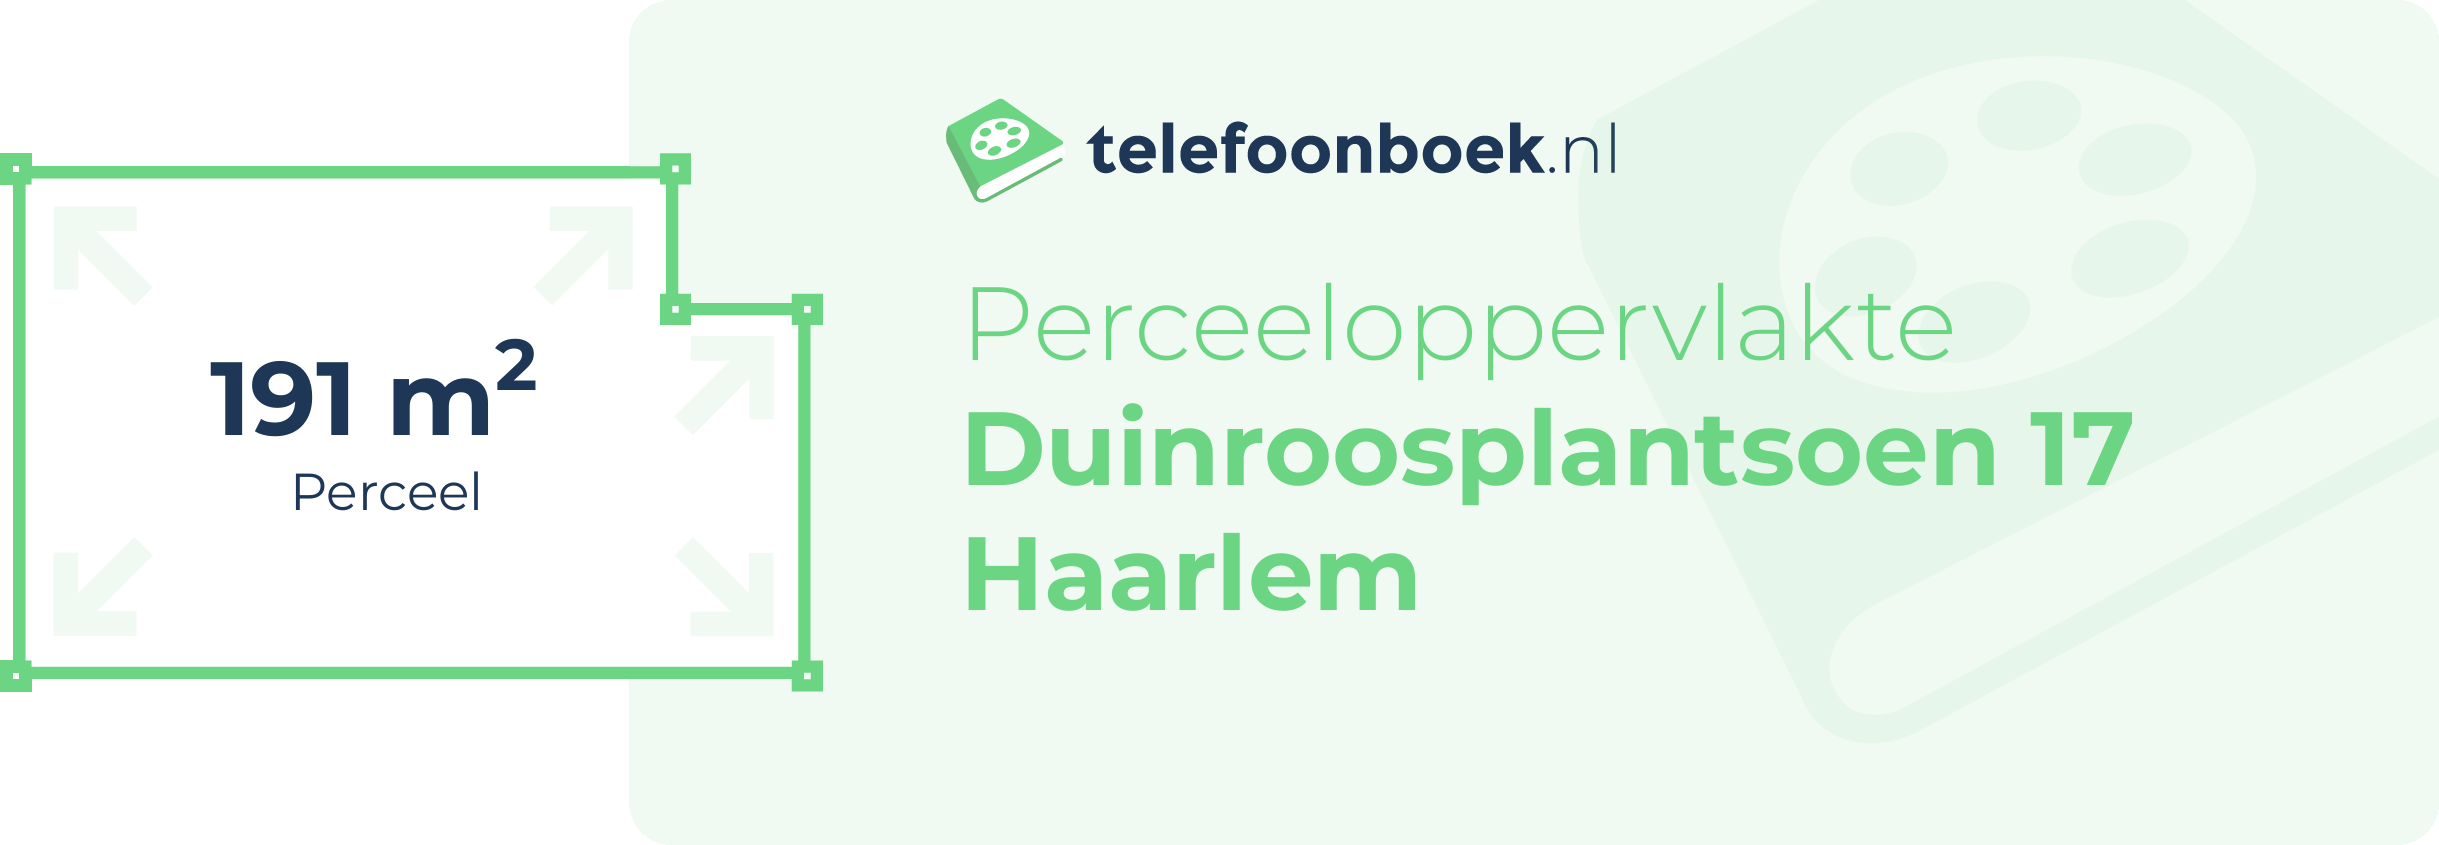 Perceeloppervlakte Duinroosplantsoen 17 Haarlem